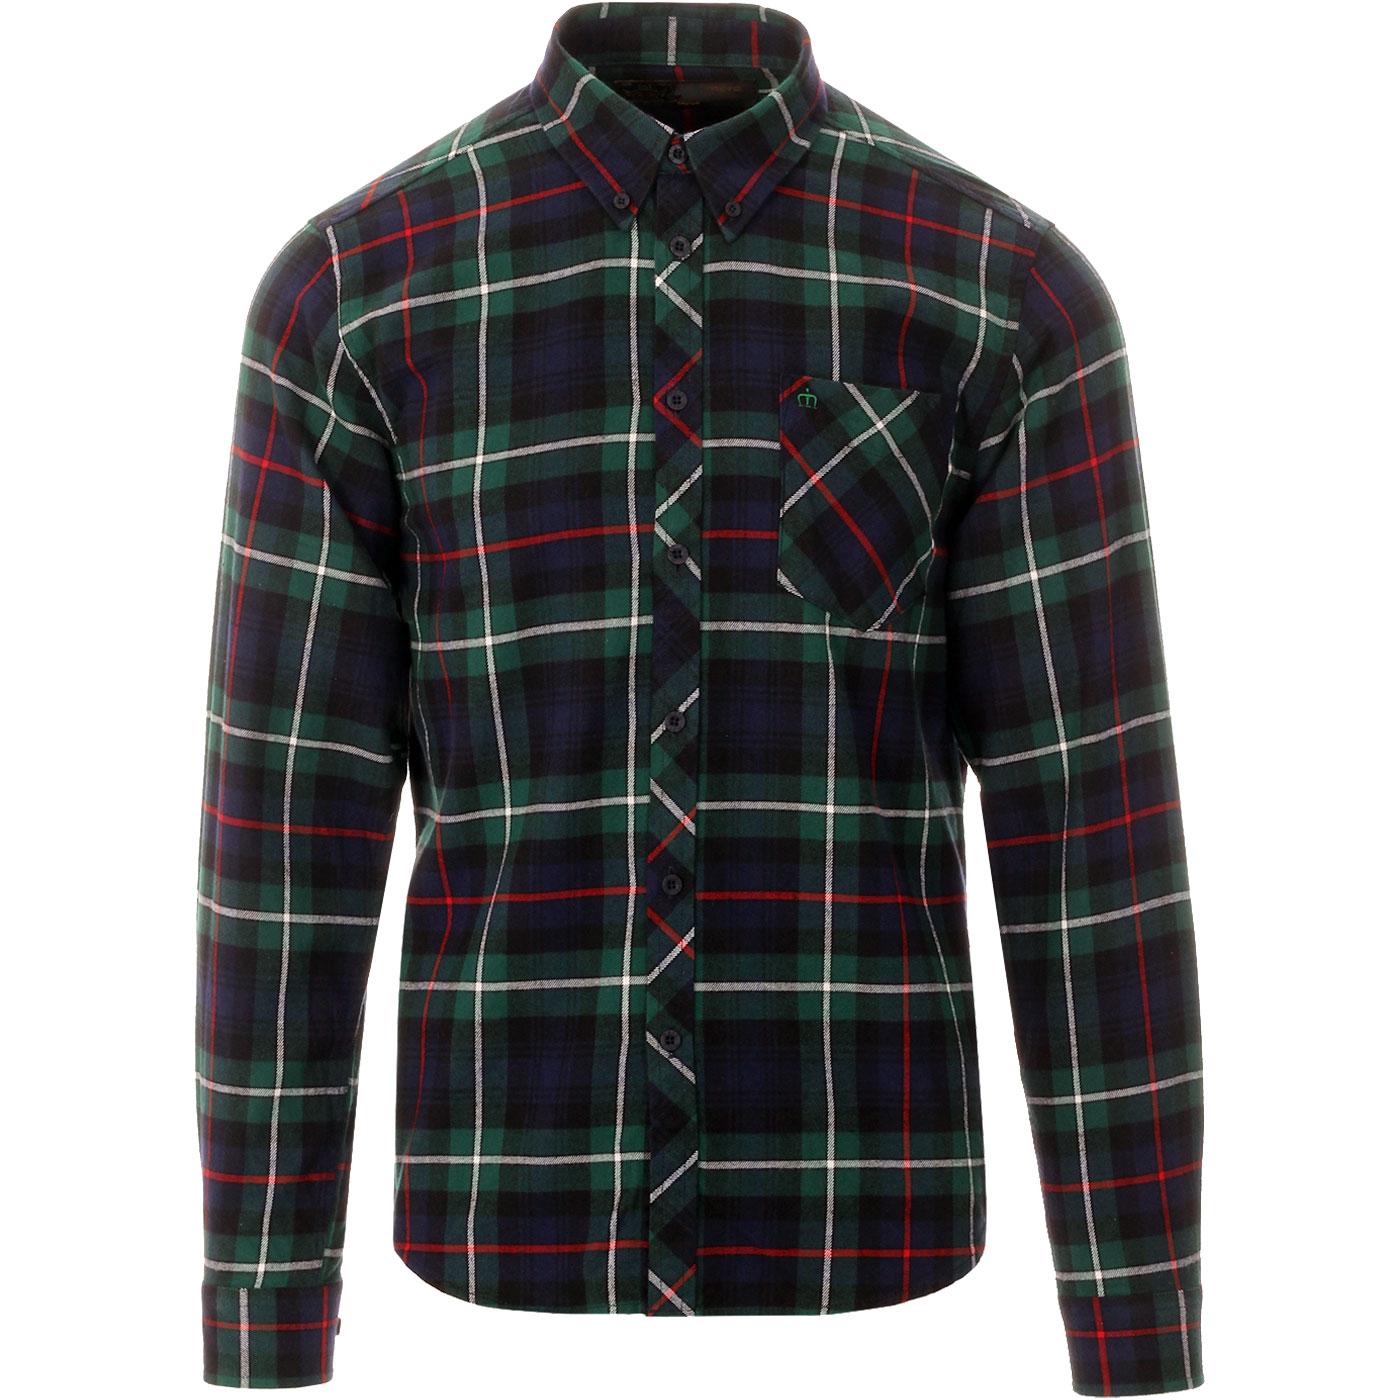 Brodick MERC LONDON Retro Mod Flannel Check Shirt